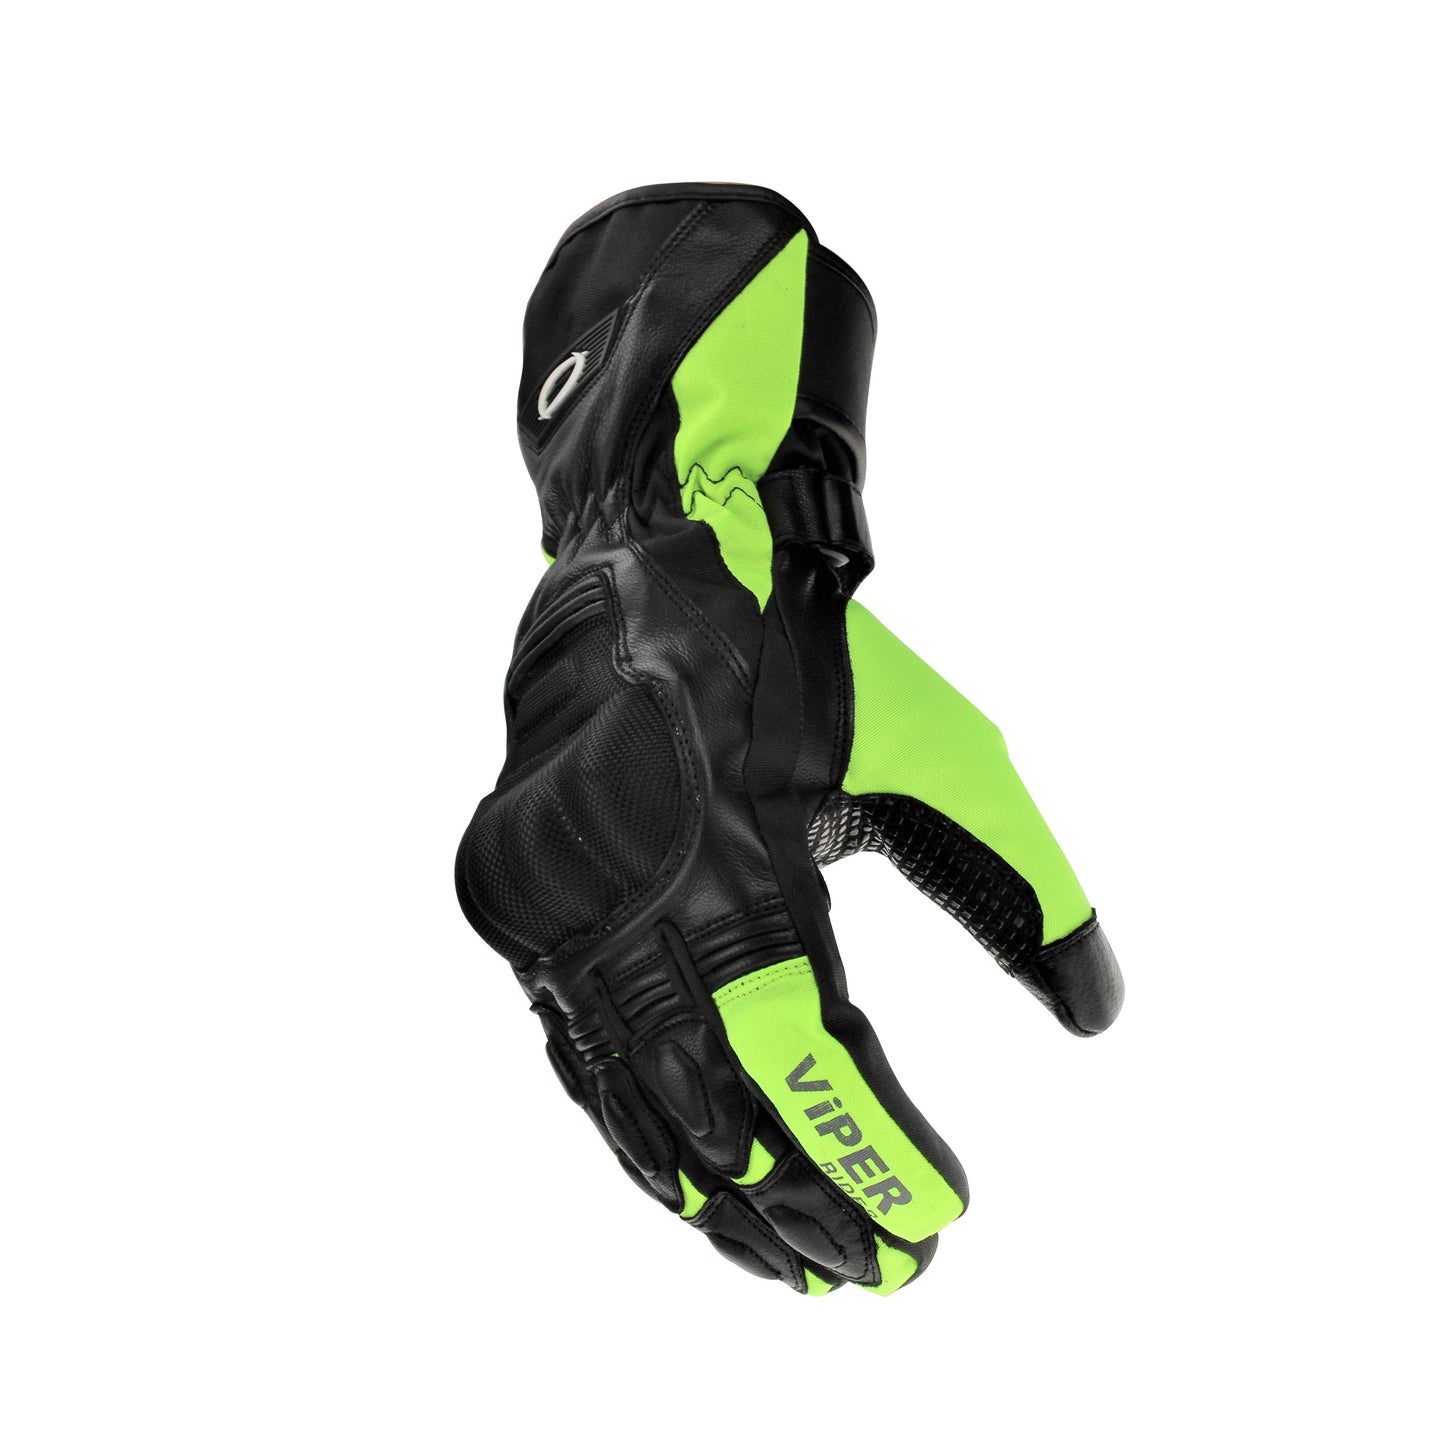 Viper Axis-8 Waterproof Gloves Black/Hi Viz Yellow